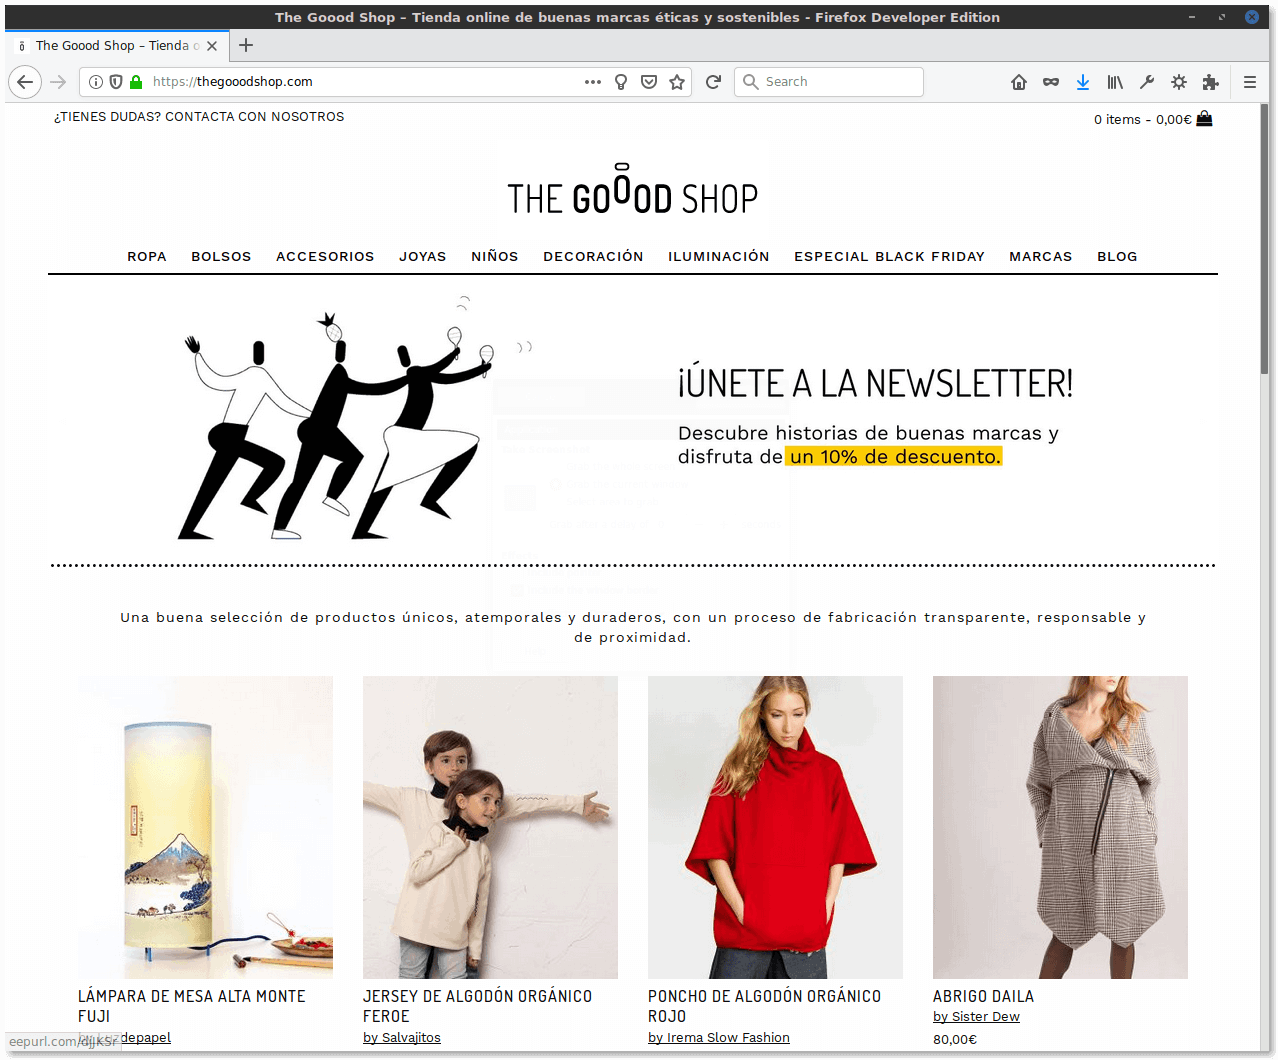 The Goood Shop website